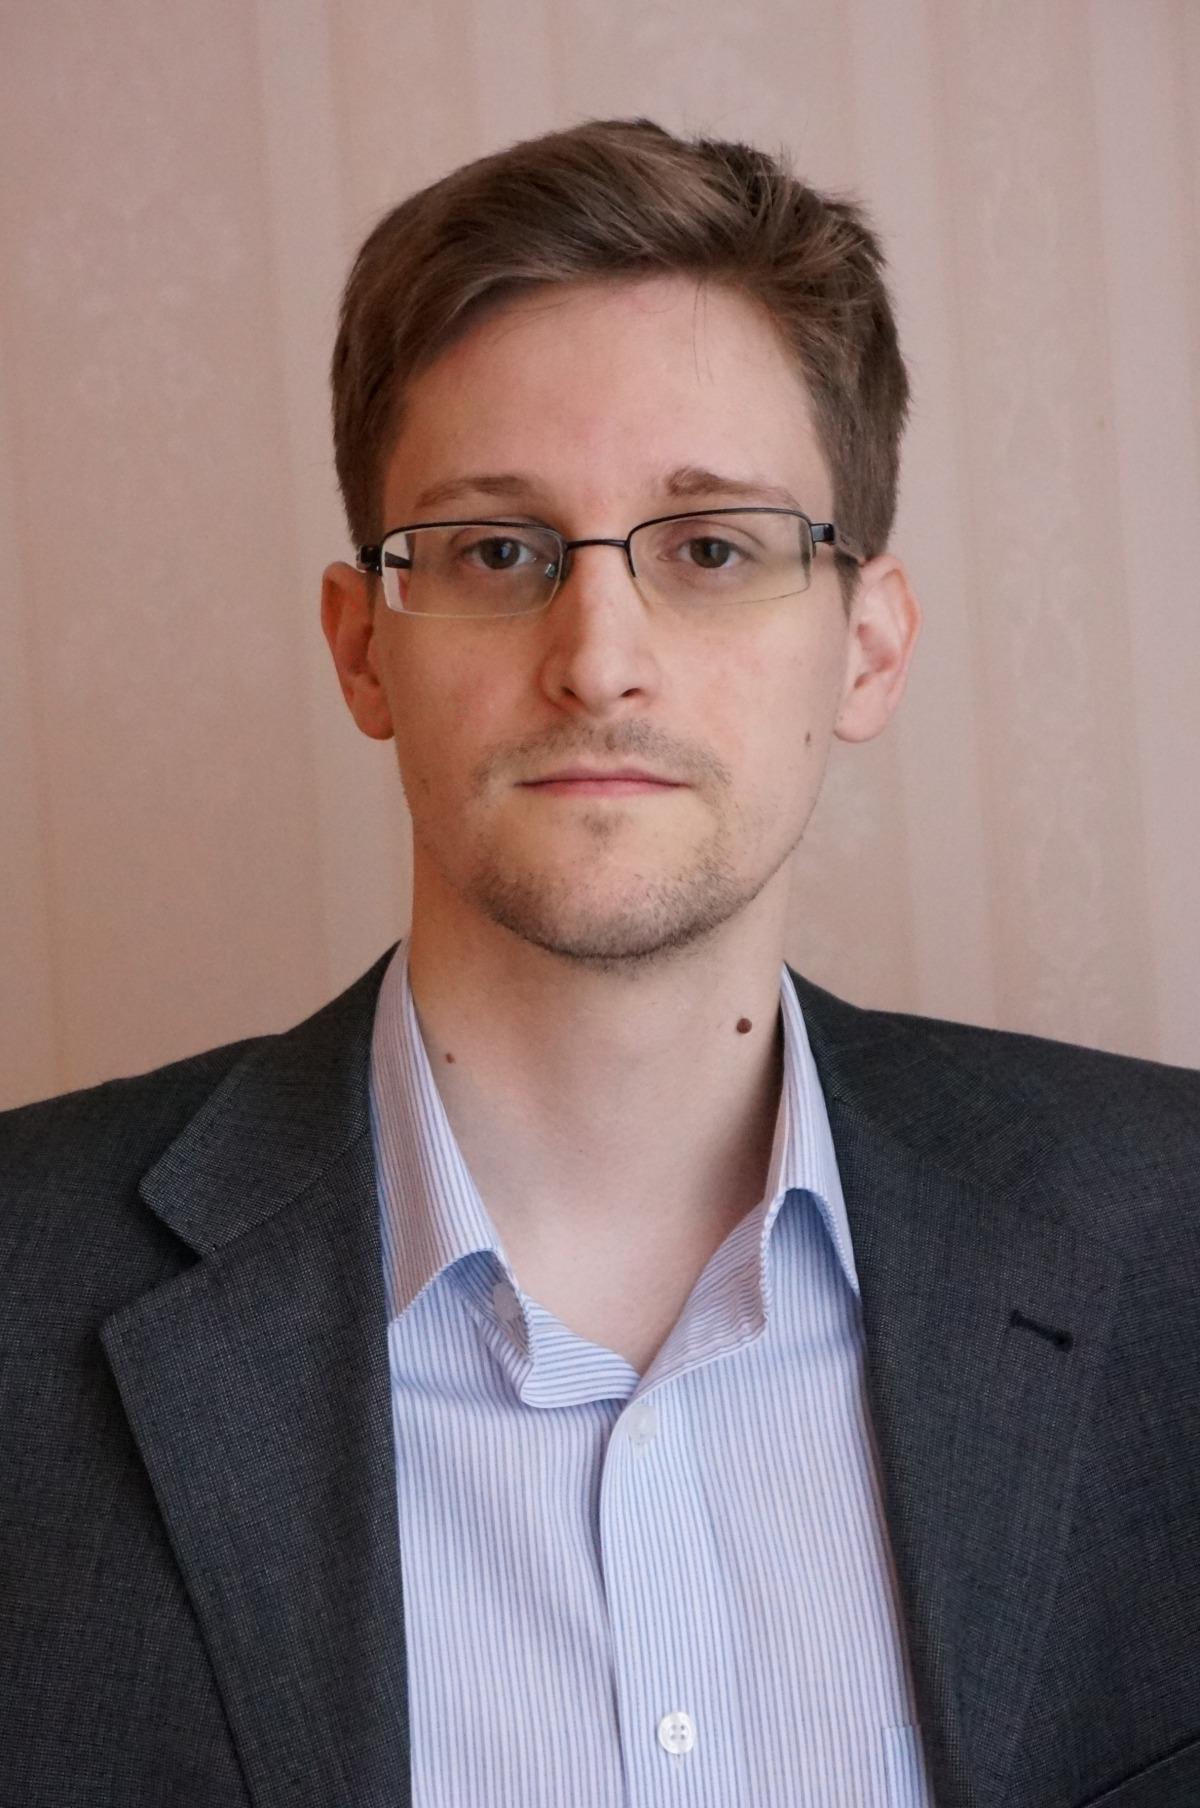 640x360px Edward Snowden 52.71 KB